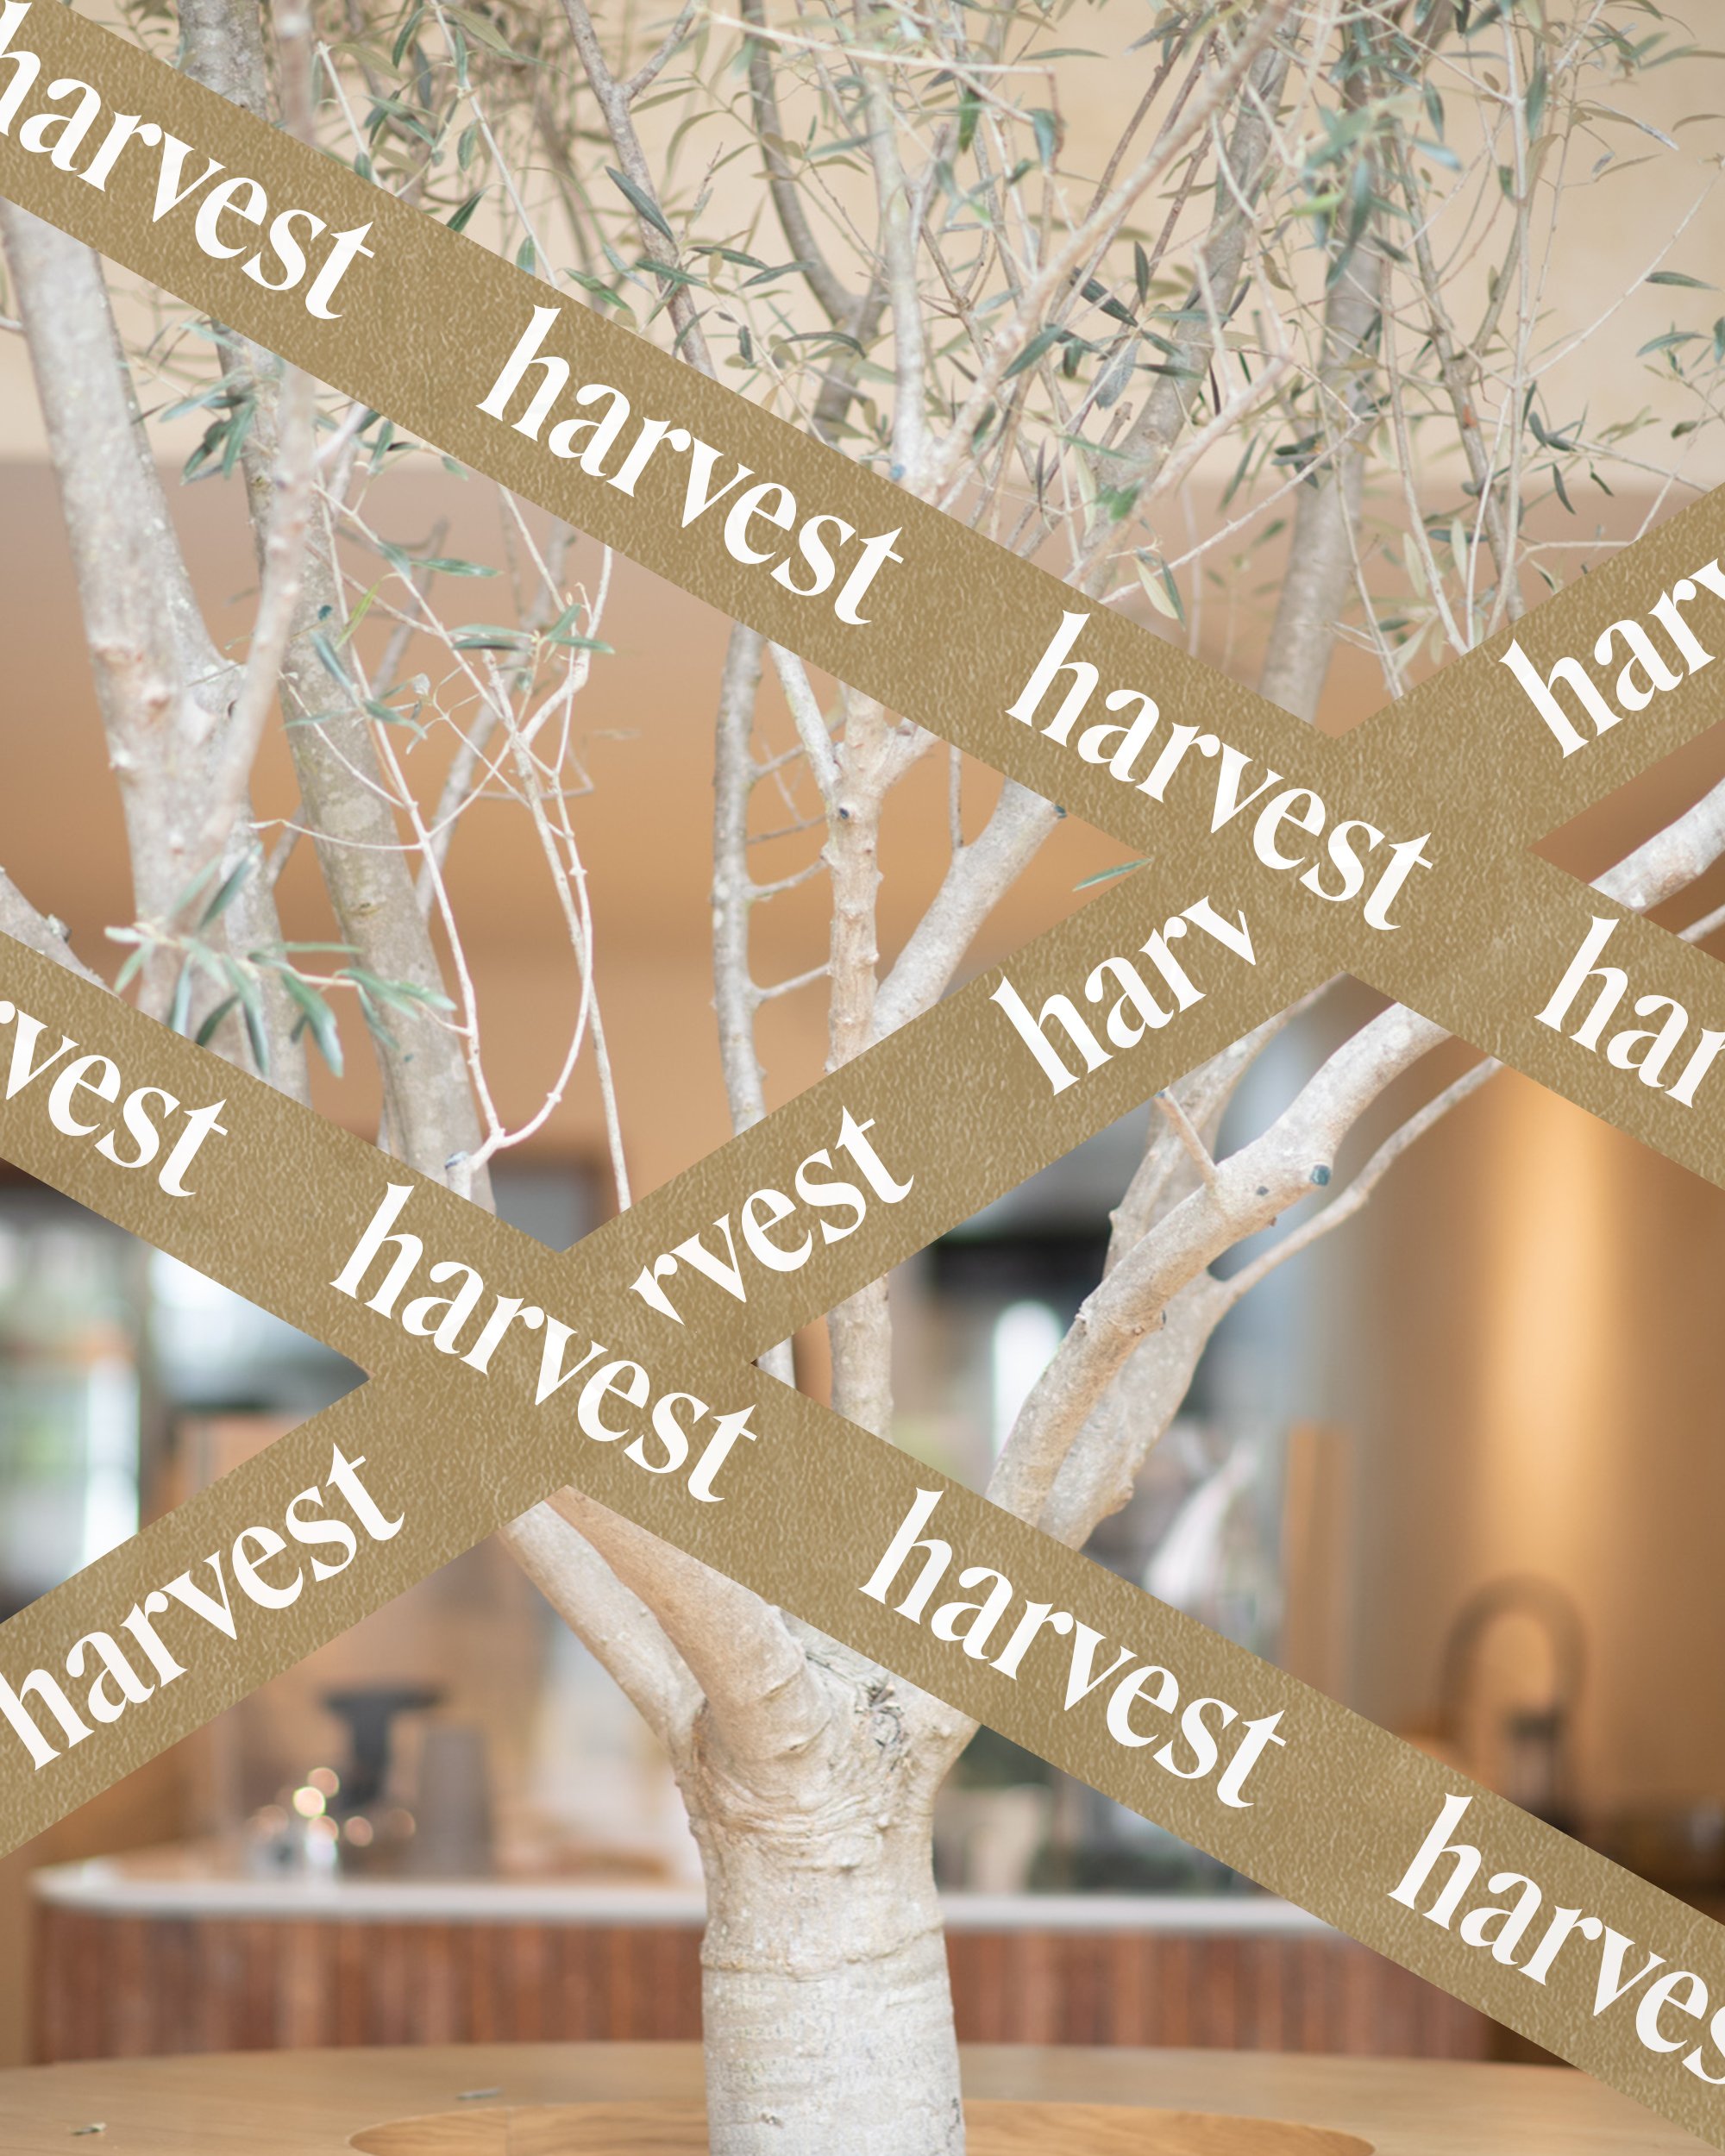 Harvest_cintas.jpg